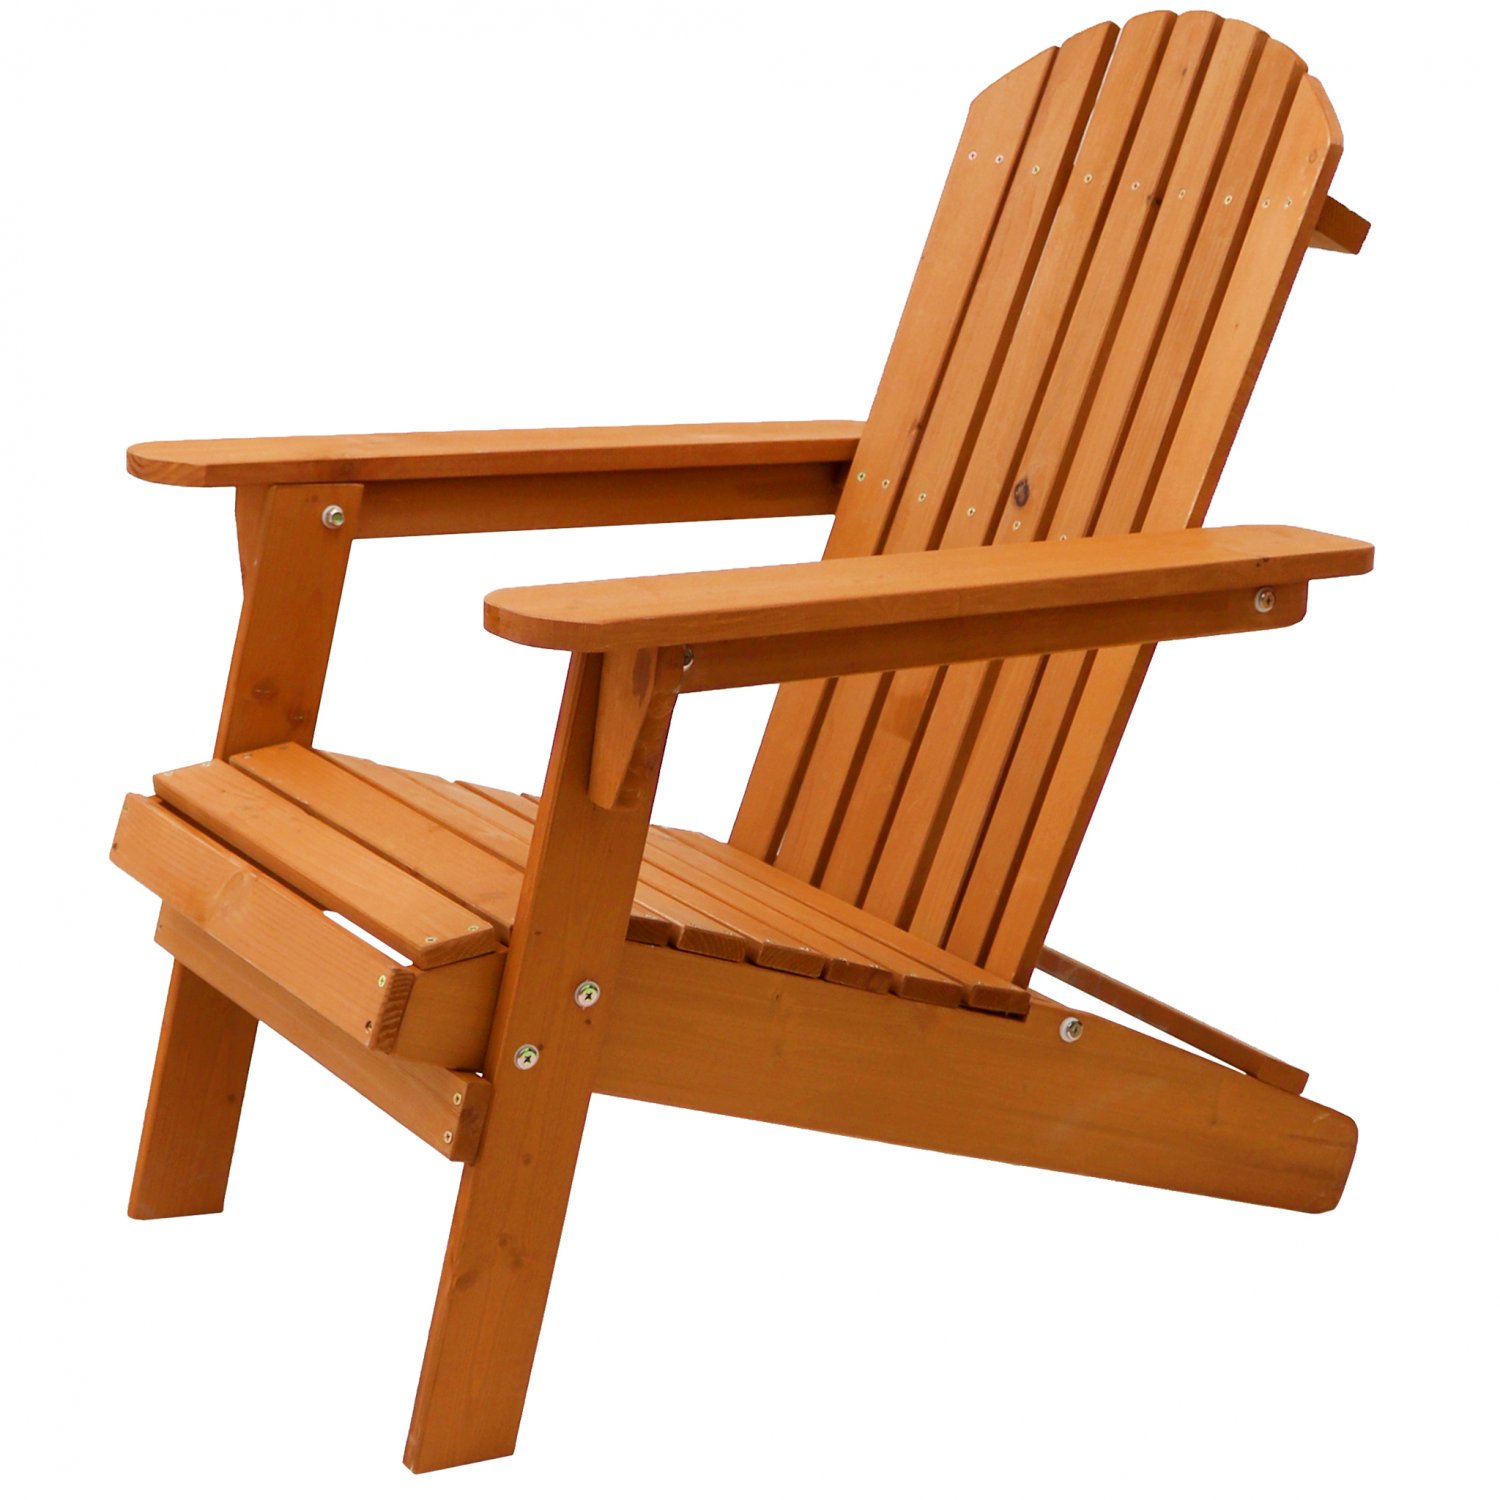 Wooden Outdoor Garden Adirondack Chair Patio Furniture